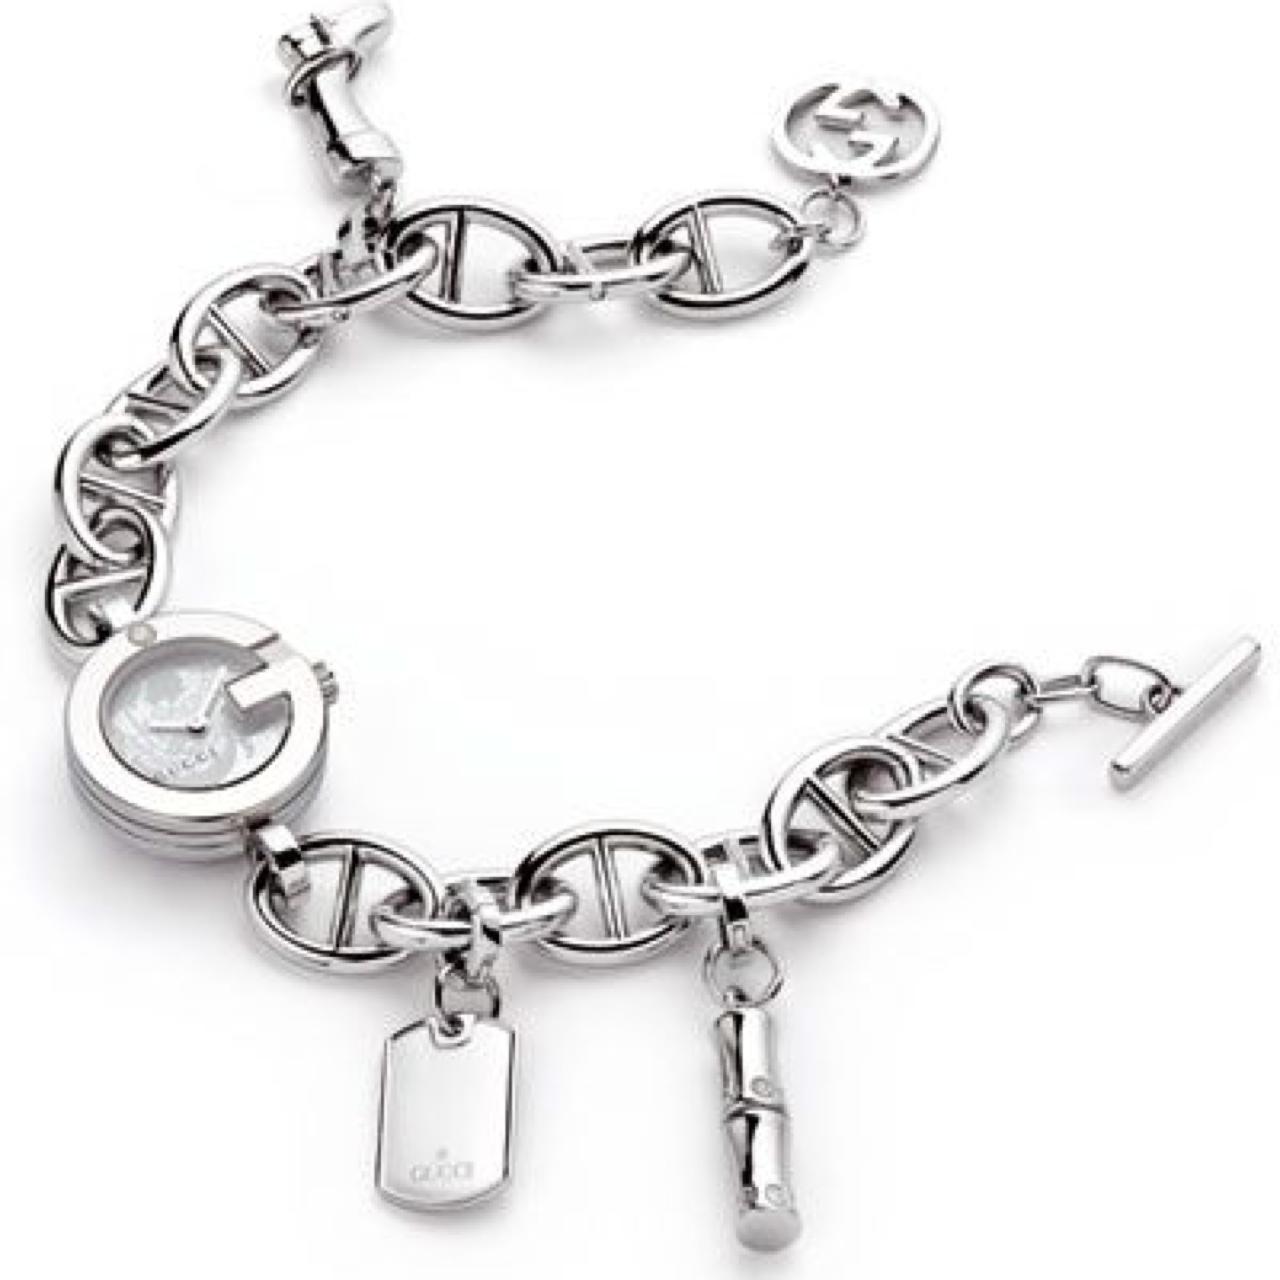 Silver Charm Bracelet with Watch